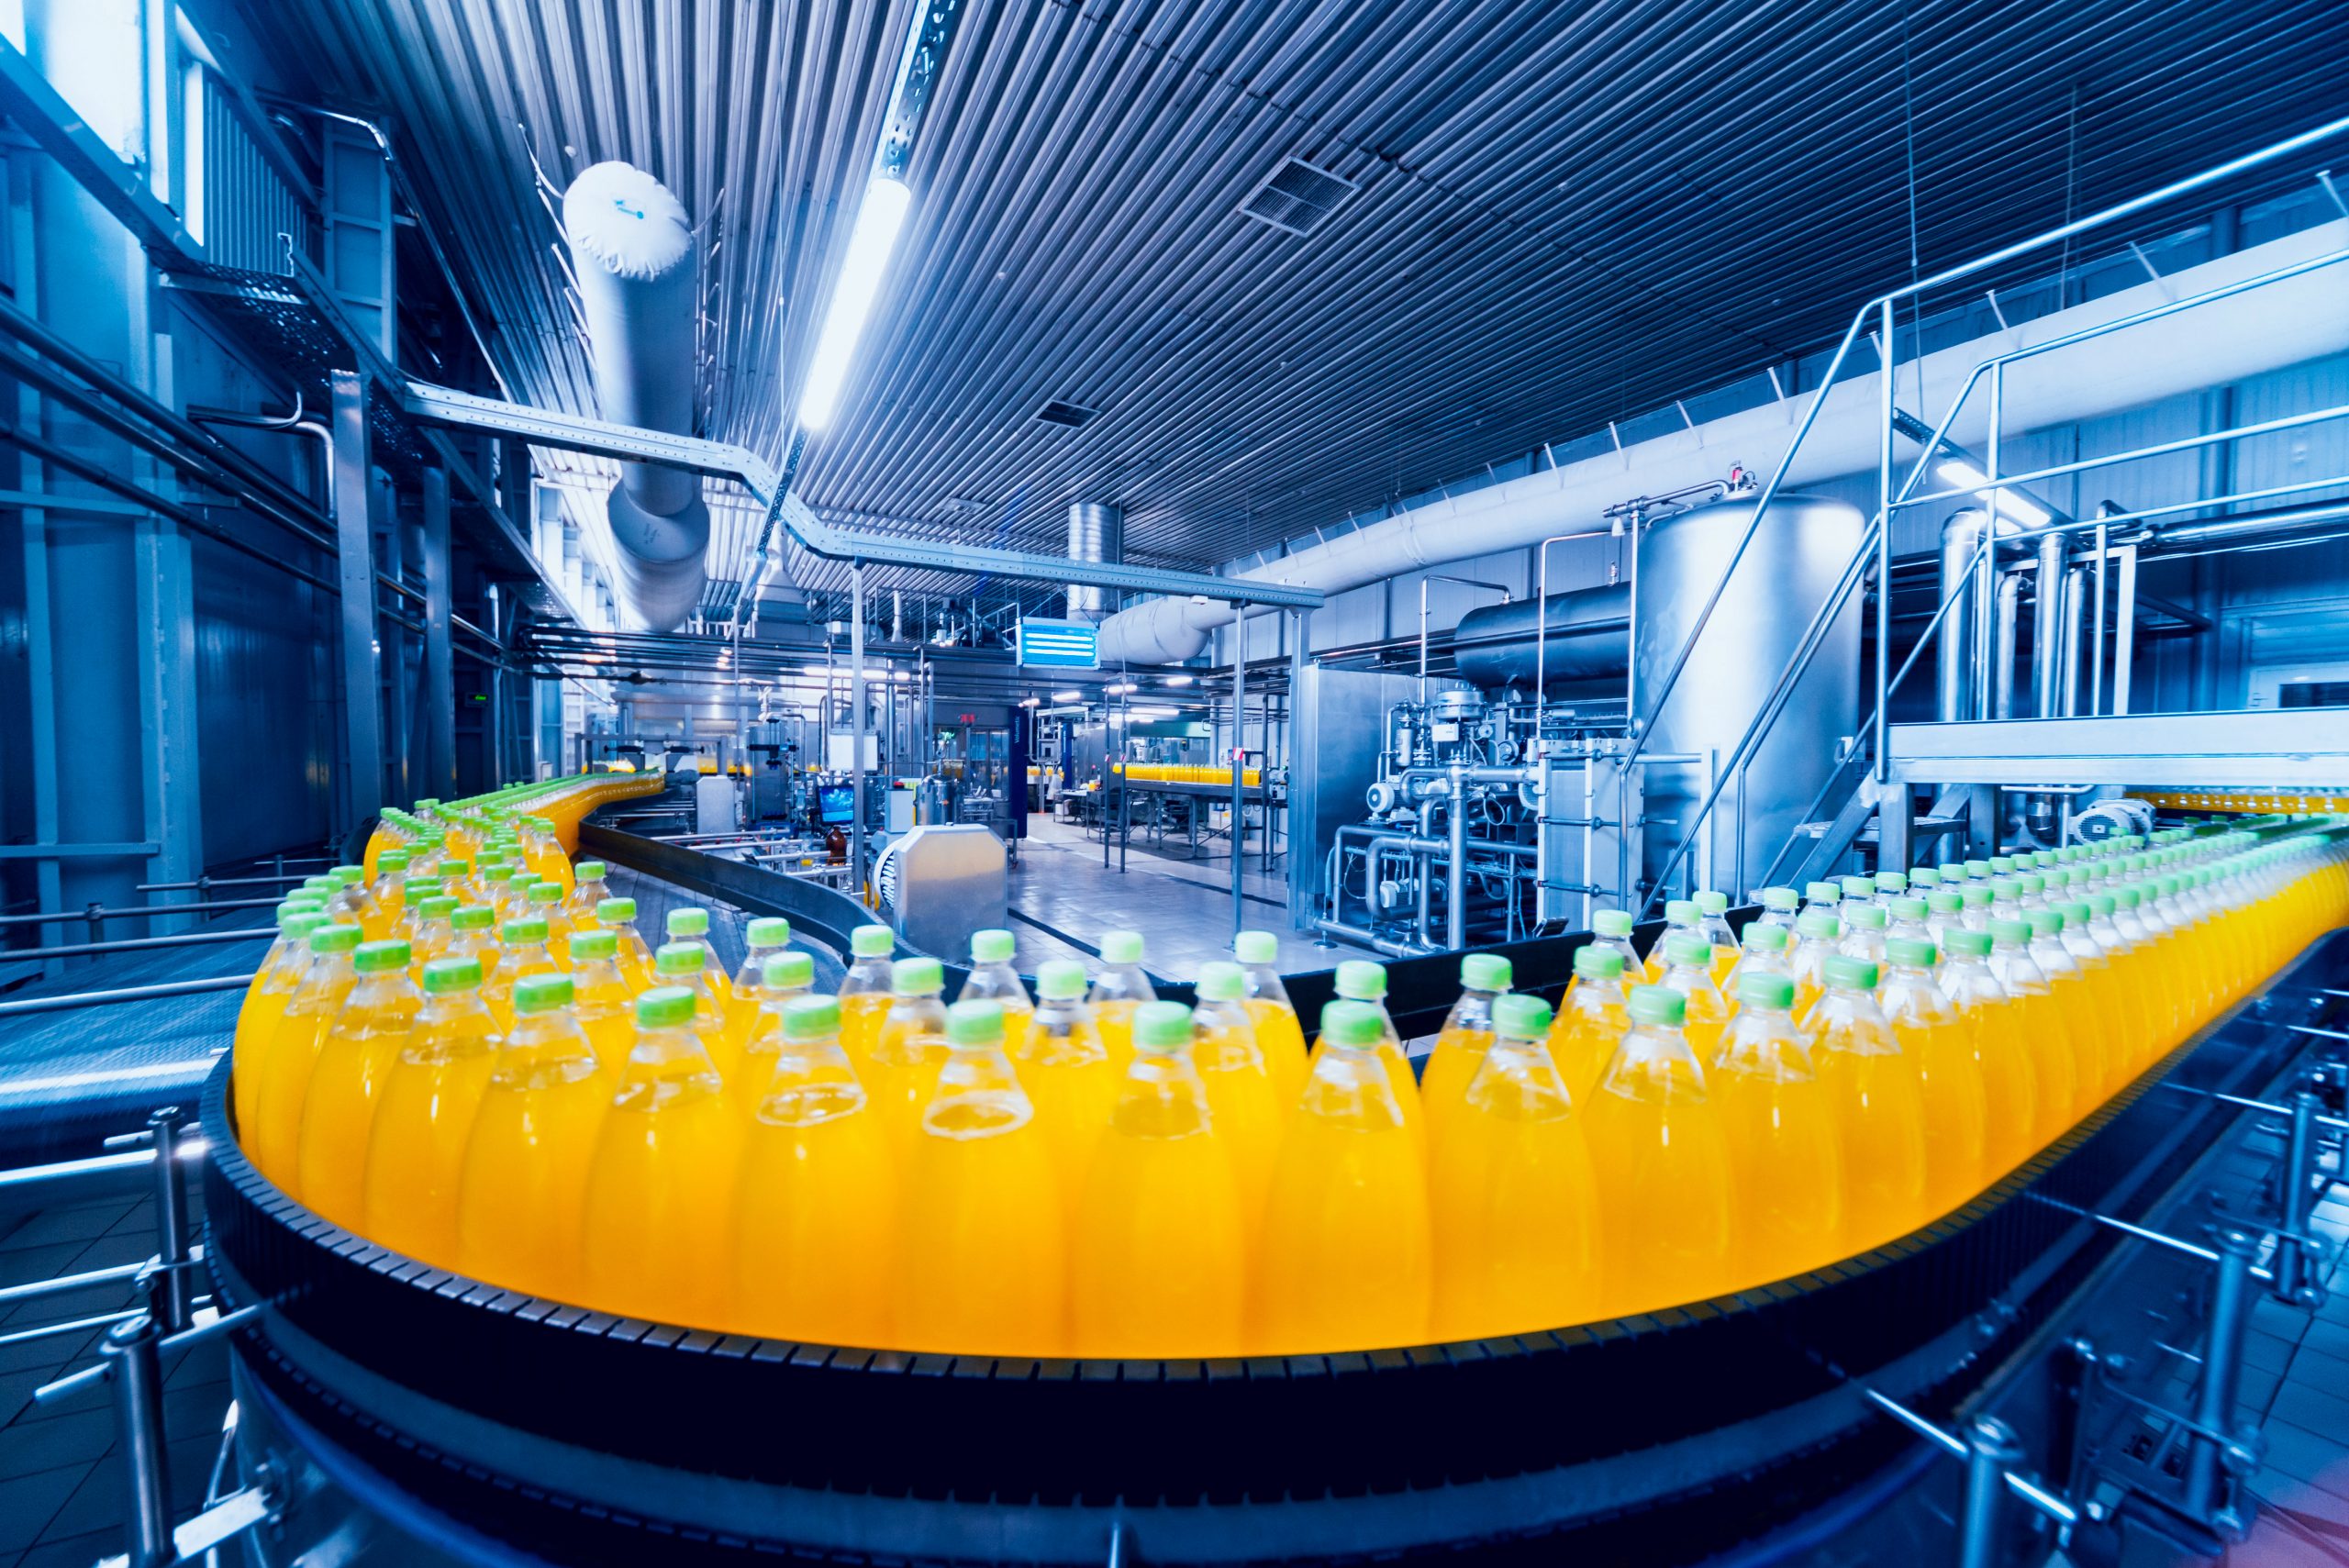 High Temperature Pumps Help Profitability of Juice Producer | IFS